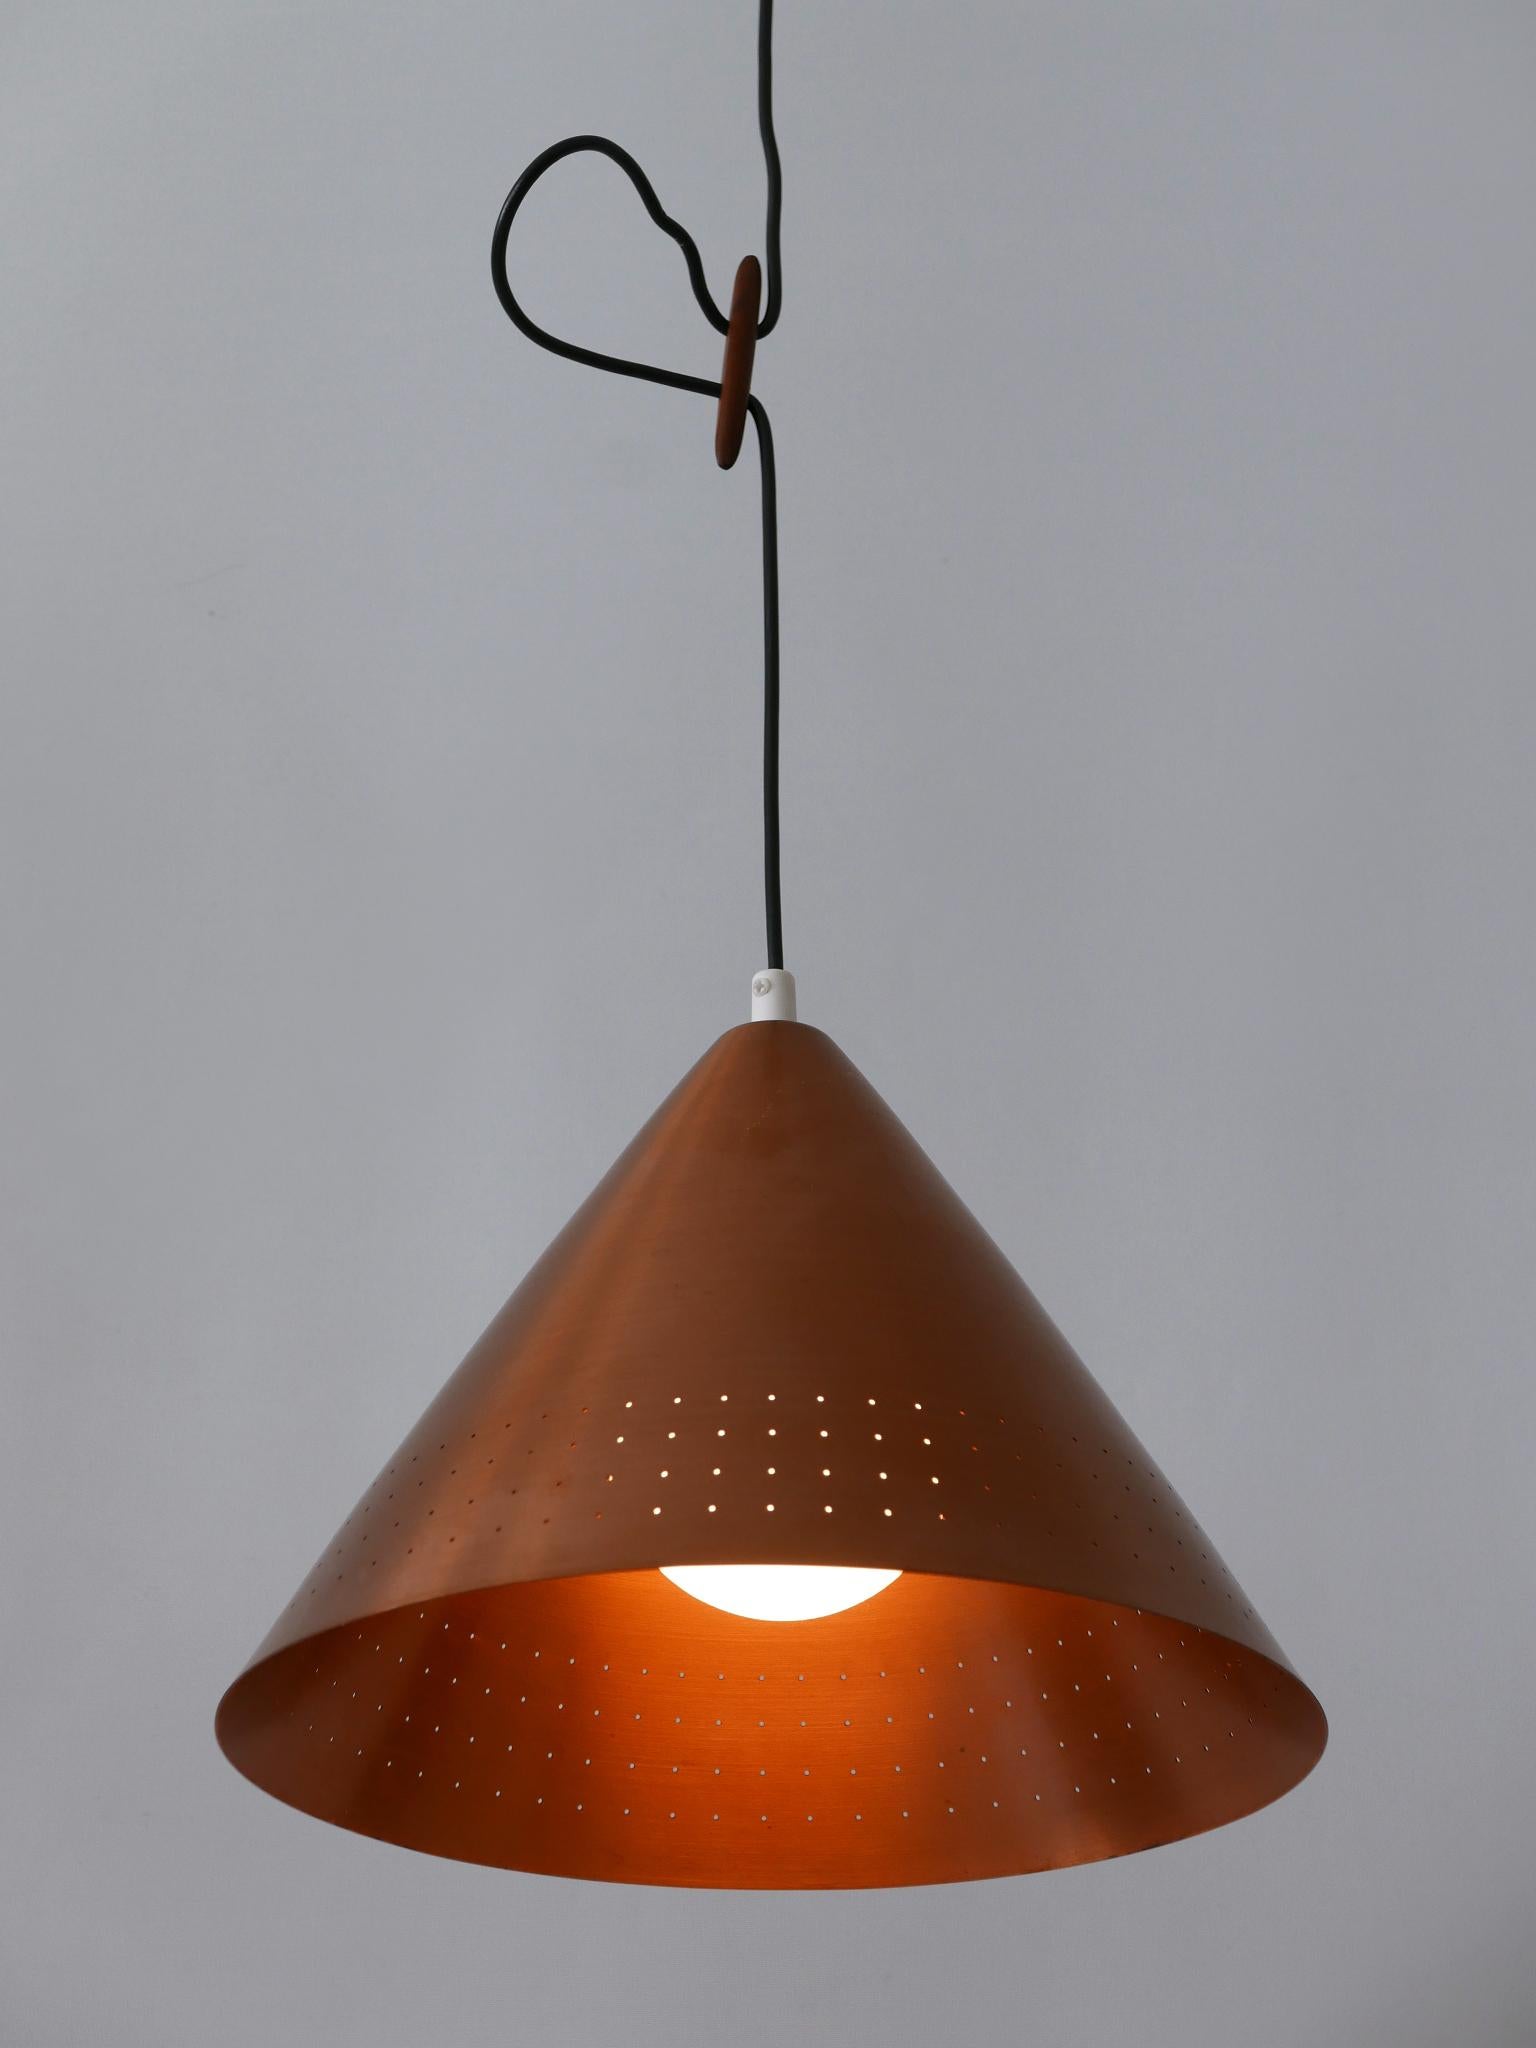 Rare Mid-Century Modern Scandinavian Copper Pendant Lamp or Hanging Light  1960s For Sale 9